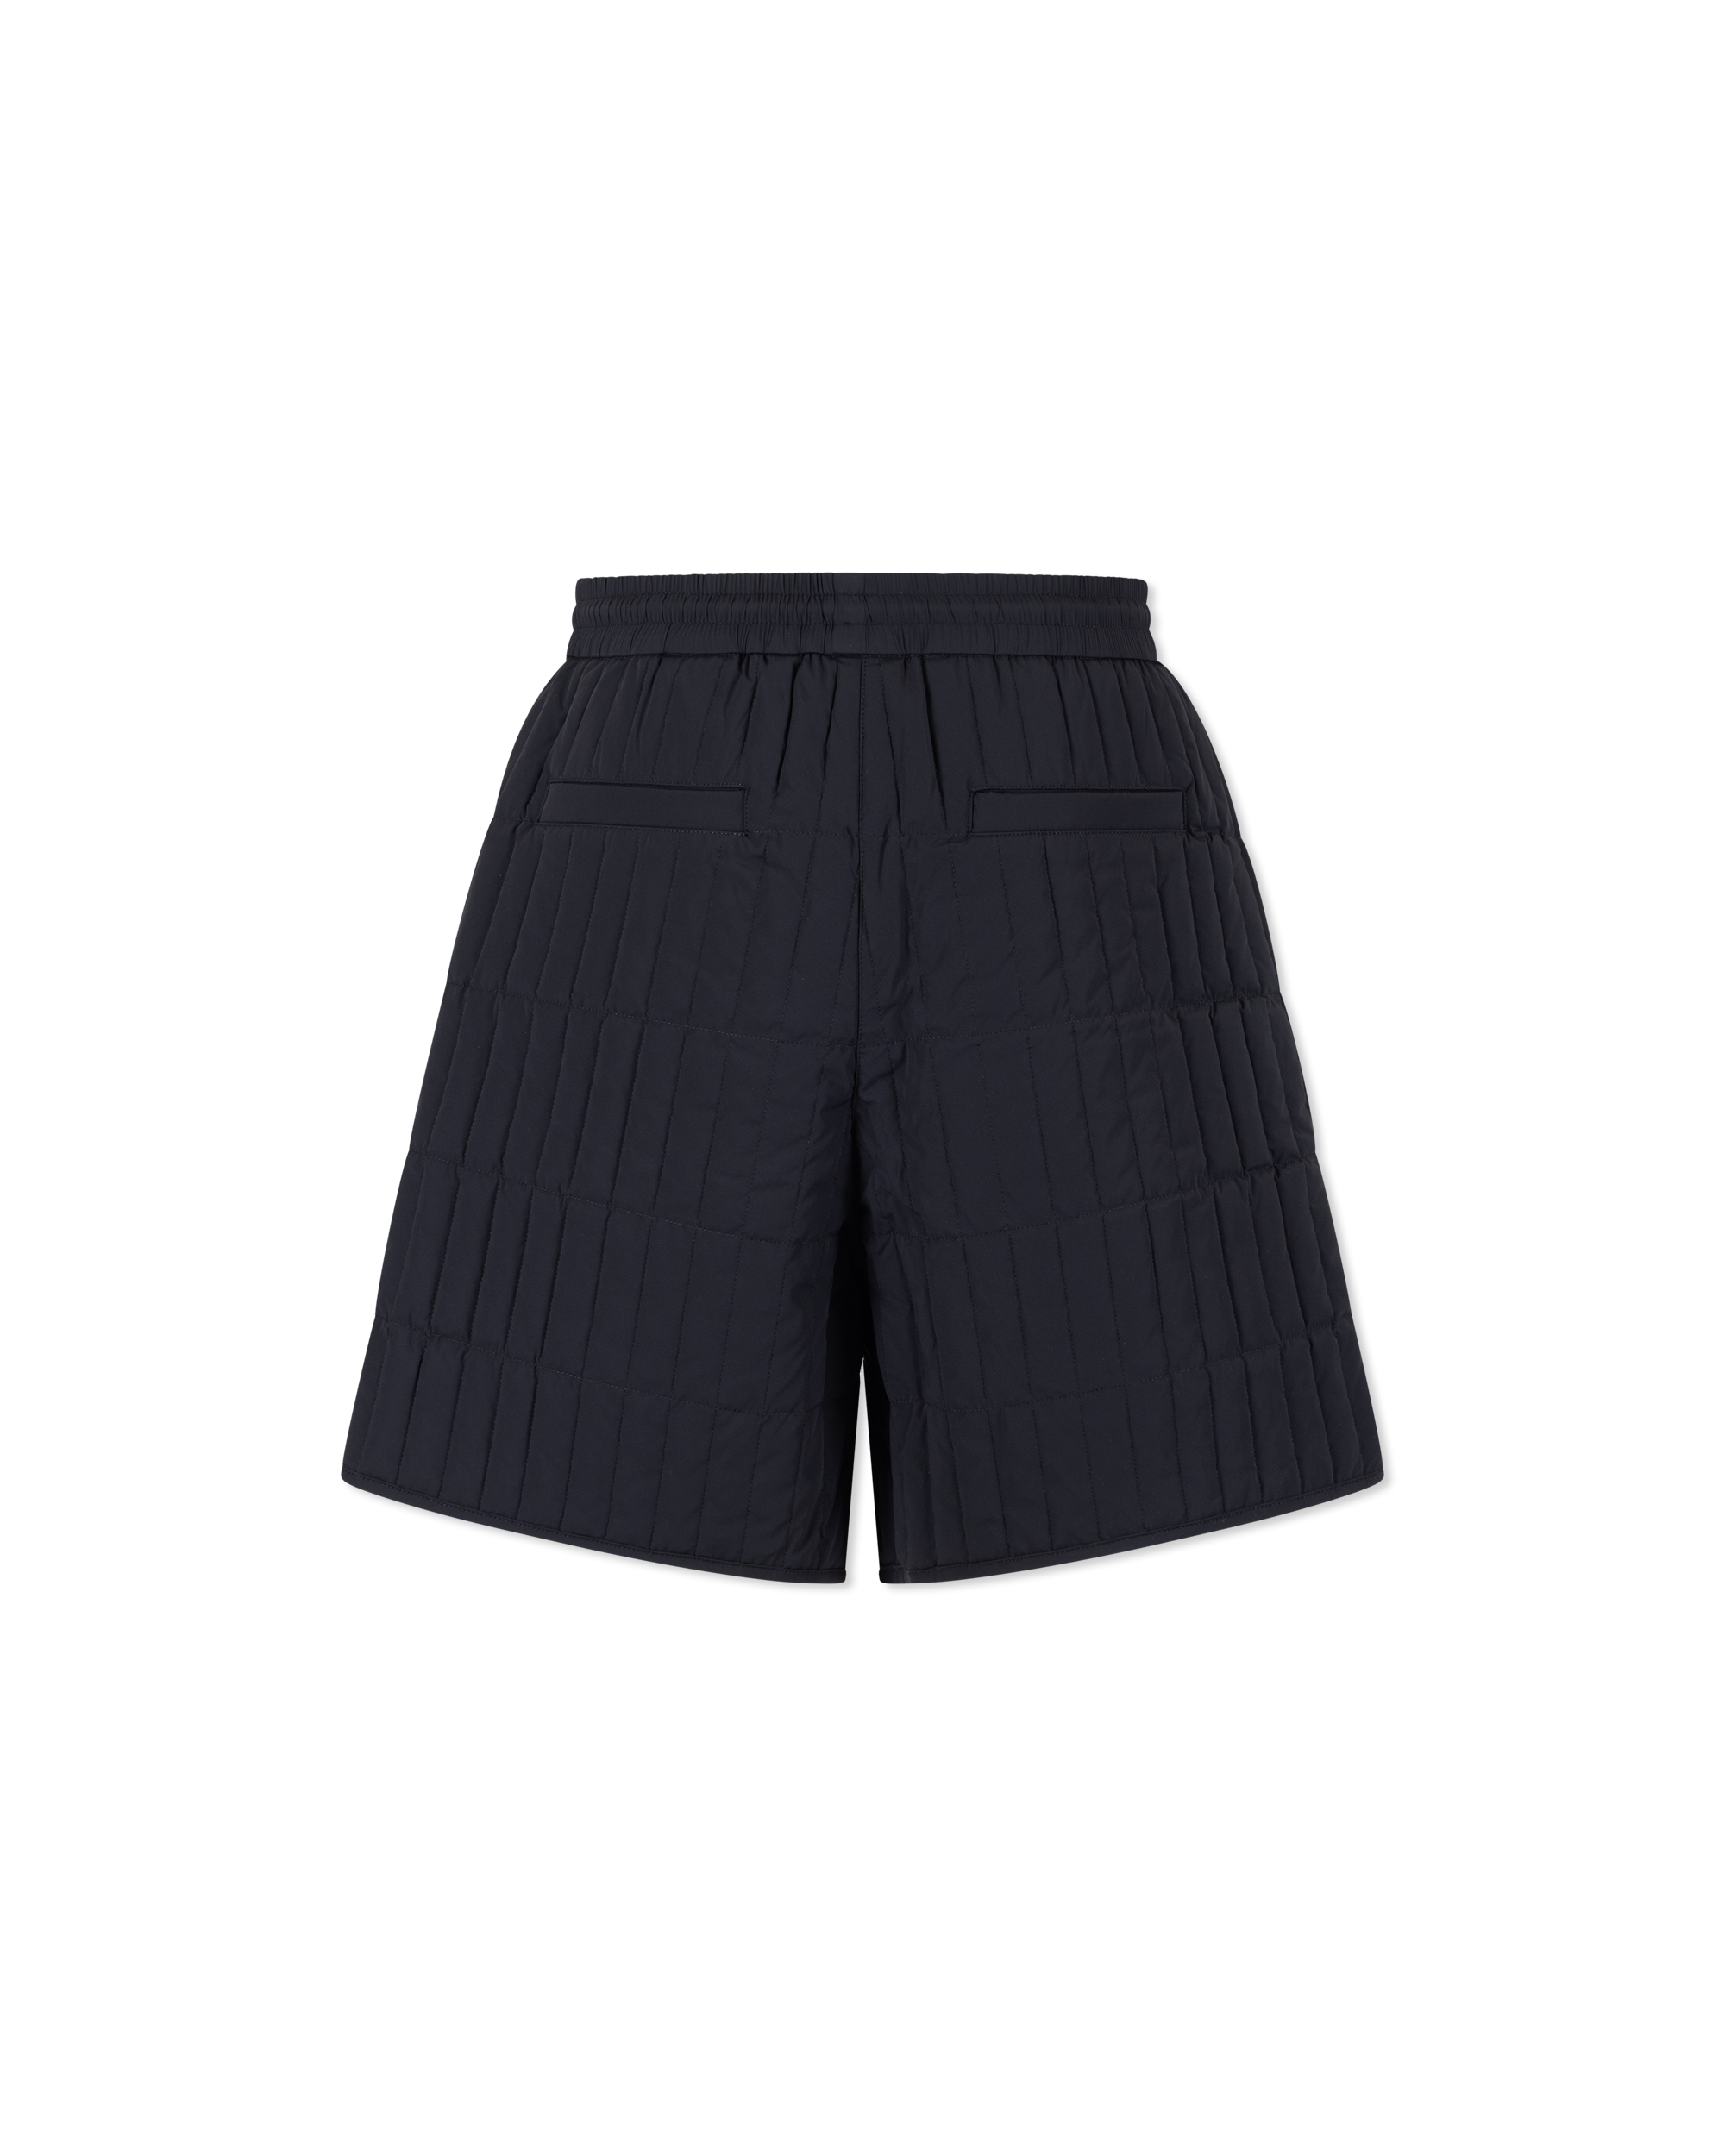 Sebastian Quilted Bermuda Shorts